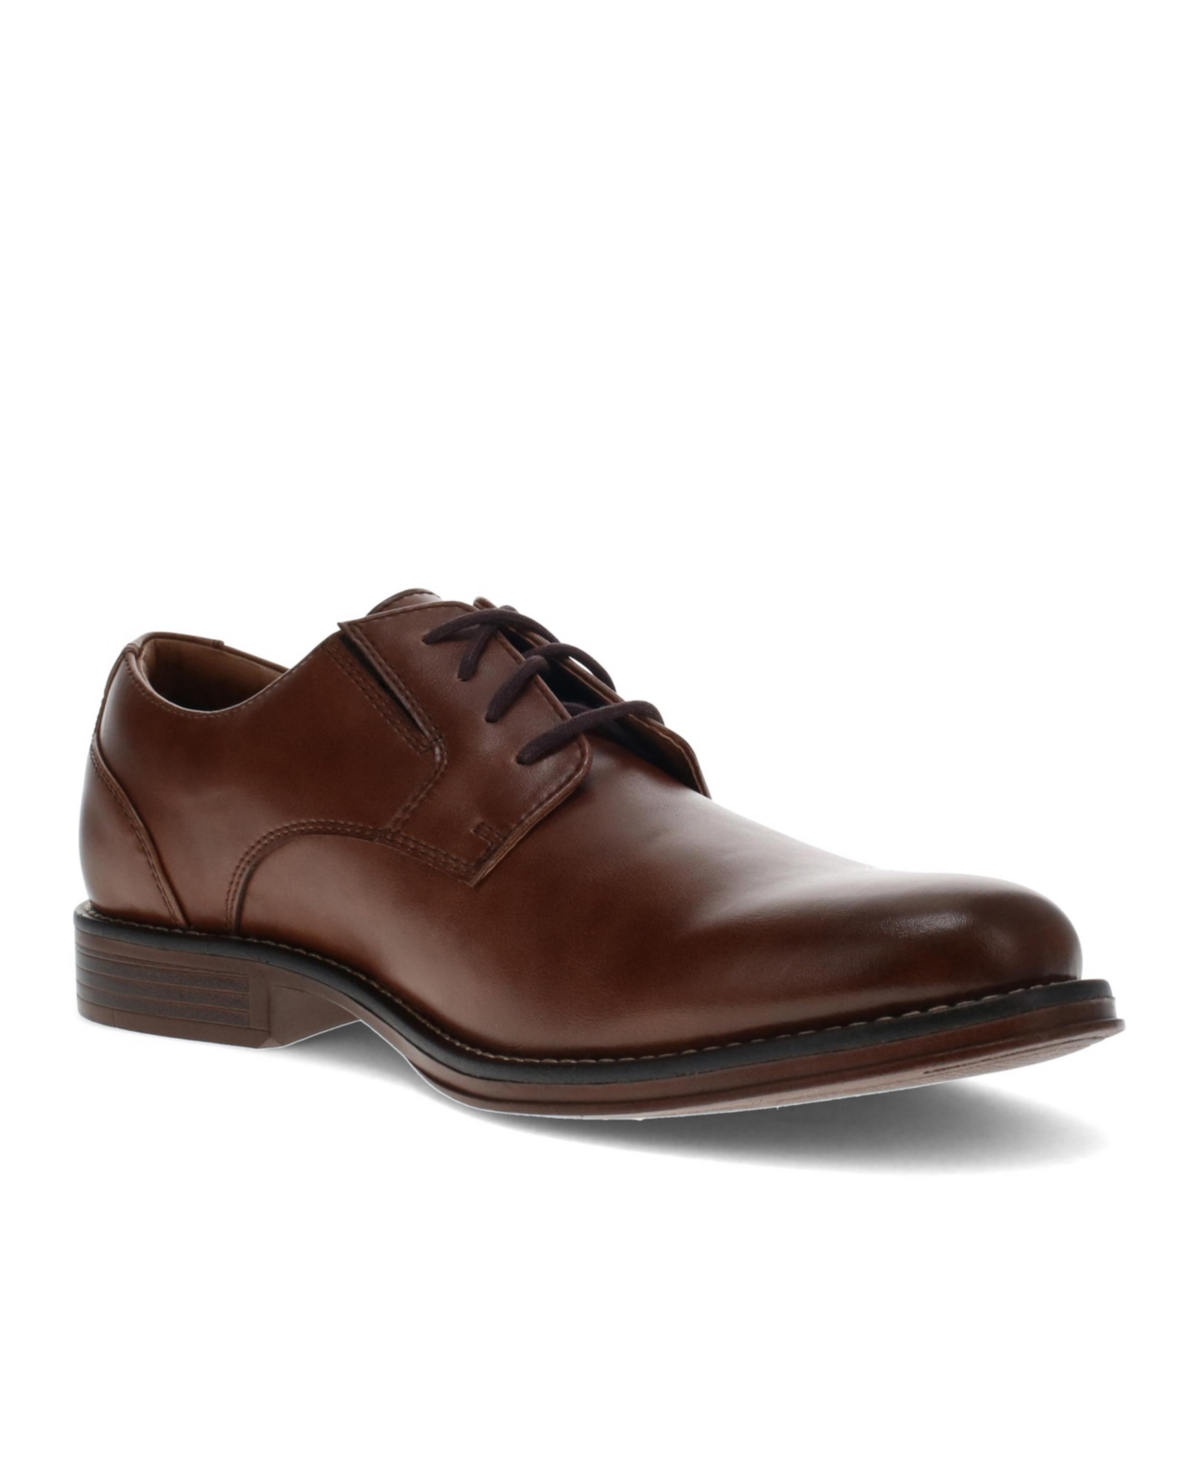 Men's Fairway Oxford Dress Shoes - Mahogany